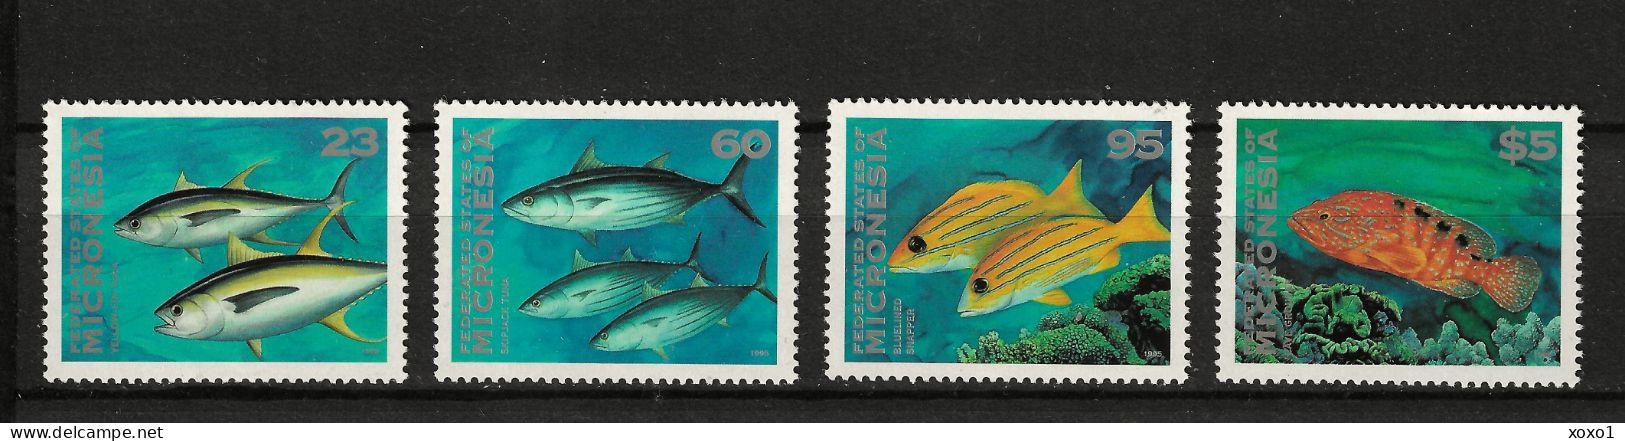 Micronesia 1995 MiNr. 427 - 430 Mikronesien Marine Life Fishes 4v MNH** 16.00 € - Micronésie